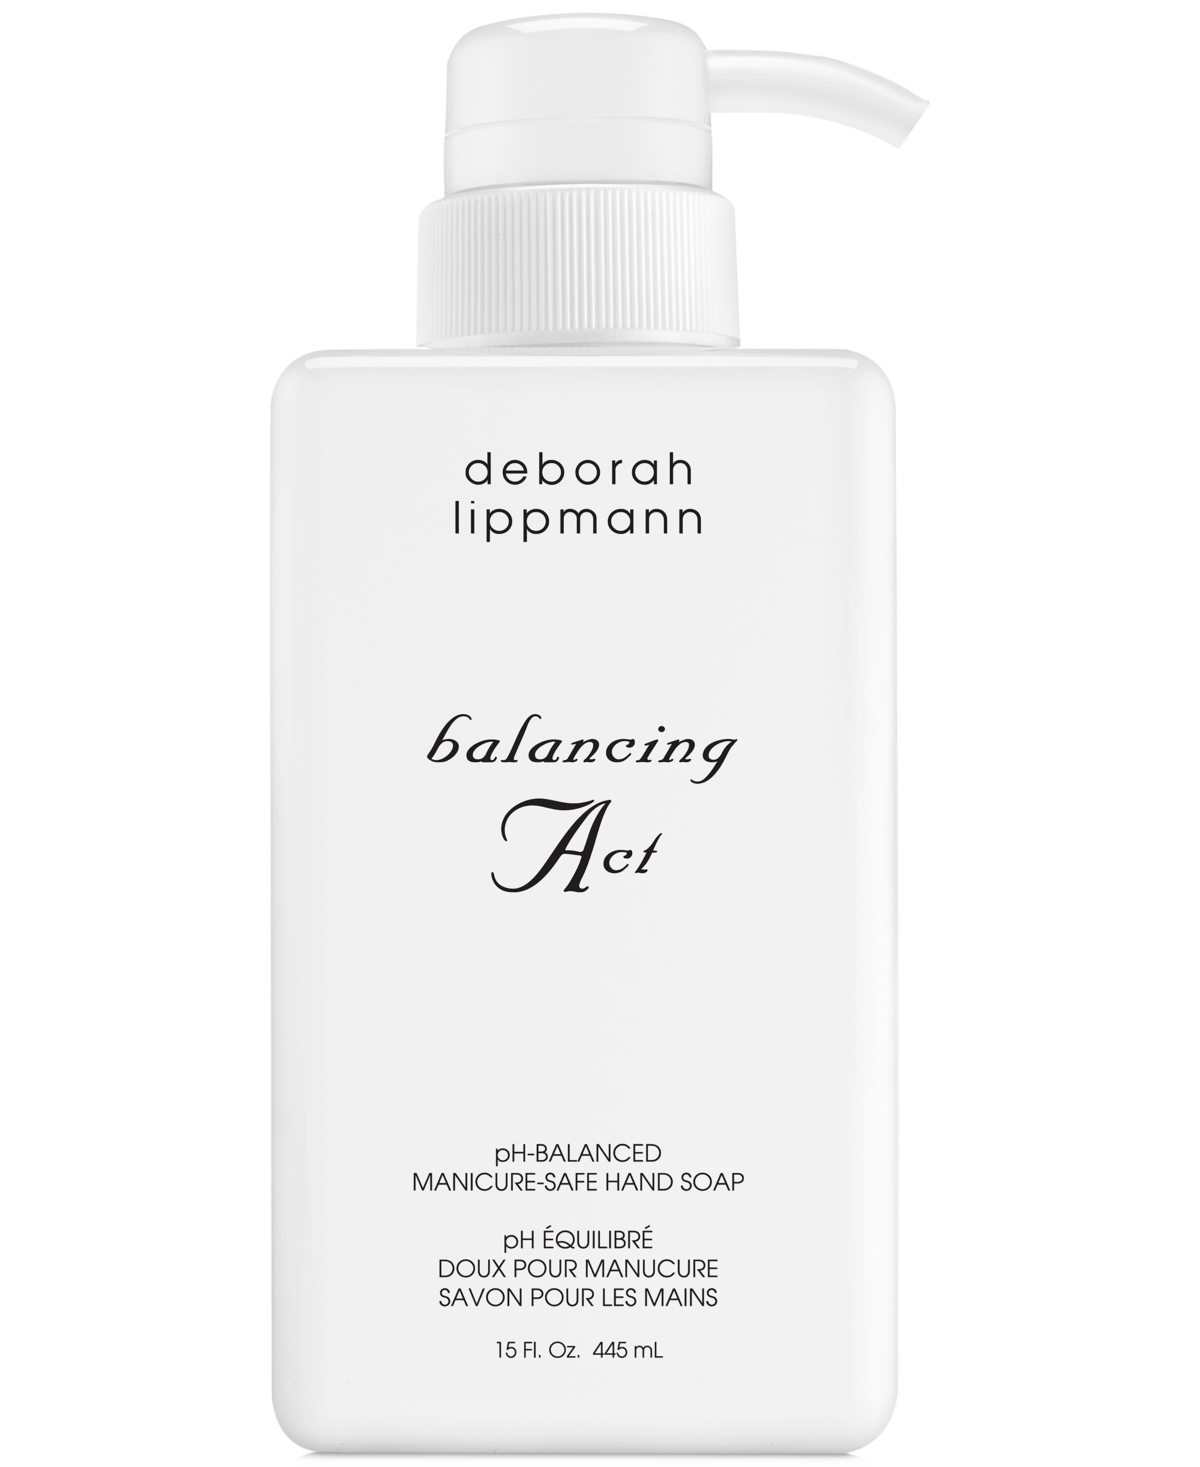 Deborah Lippmann Balancing Act Ph-balanced Manicure-safe Hand Soap, 15-oz. In N,a